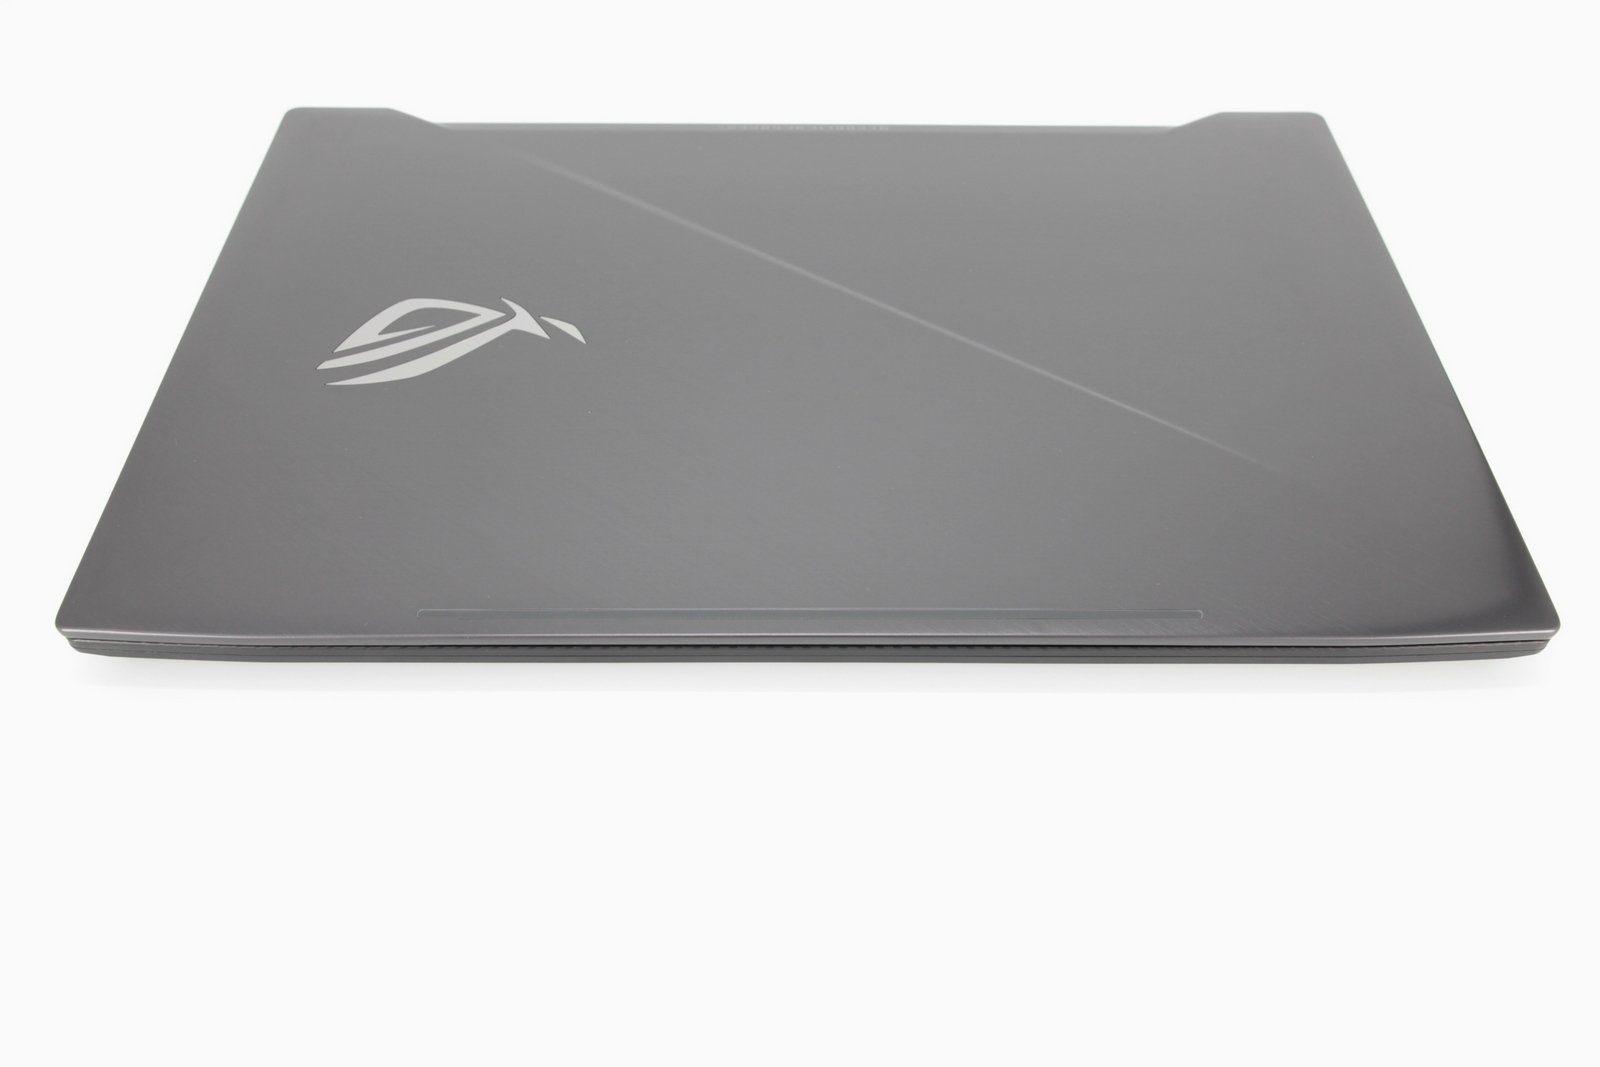 ASUS ROG GL703GM 17" Gaming Laptop: 256GB+1TB, GTX 1060, Core i7-8750H 16GB RAM - CruiseTech